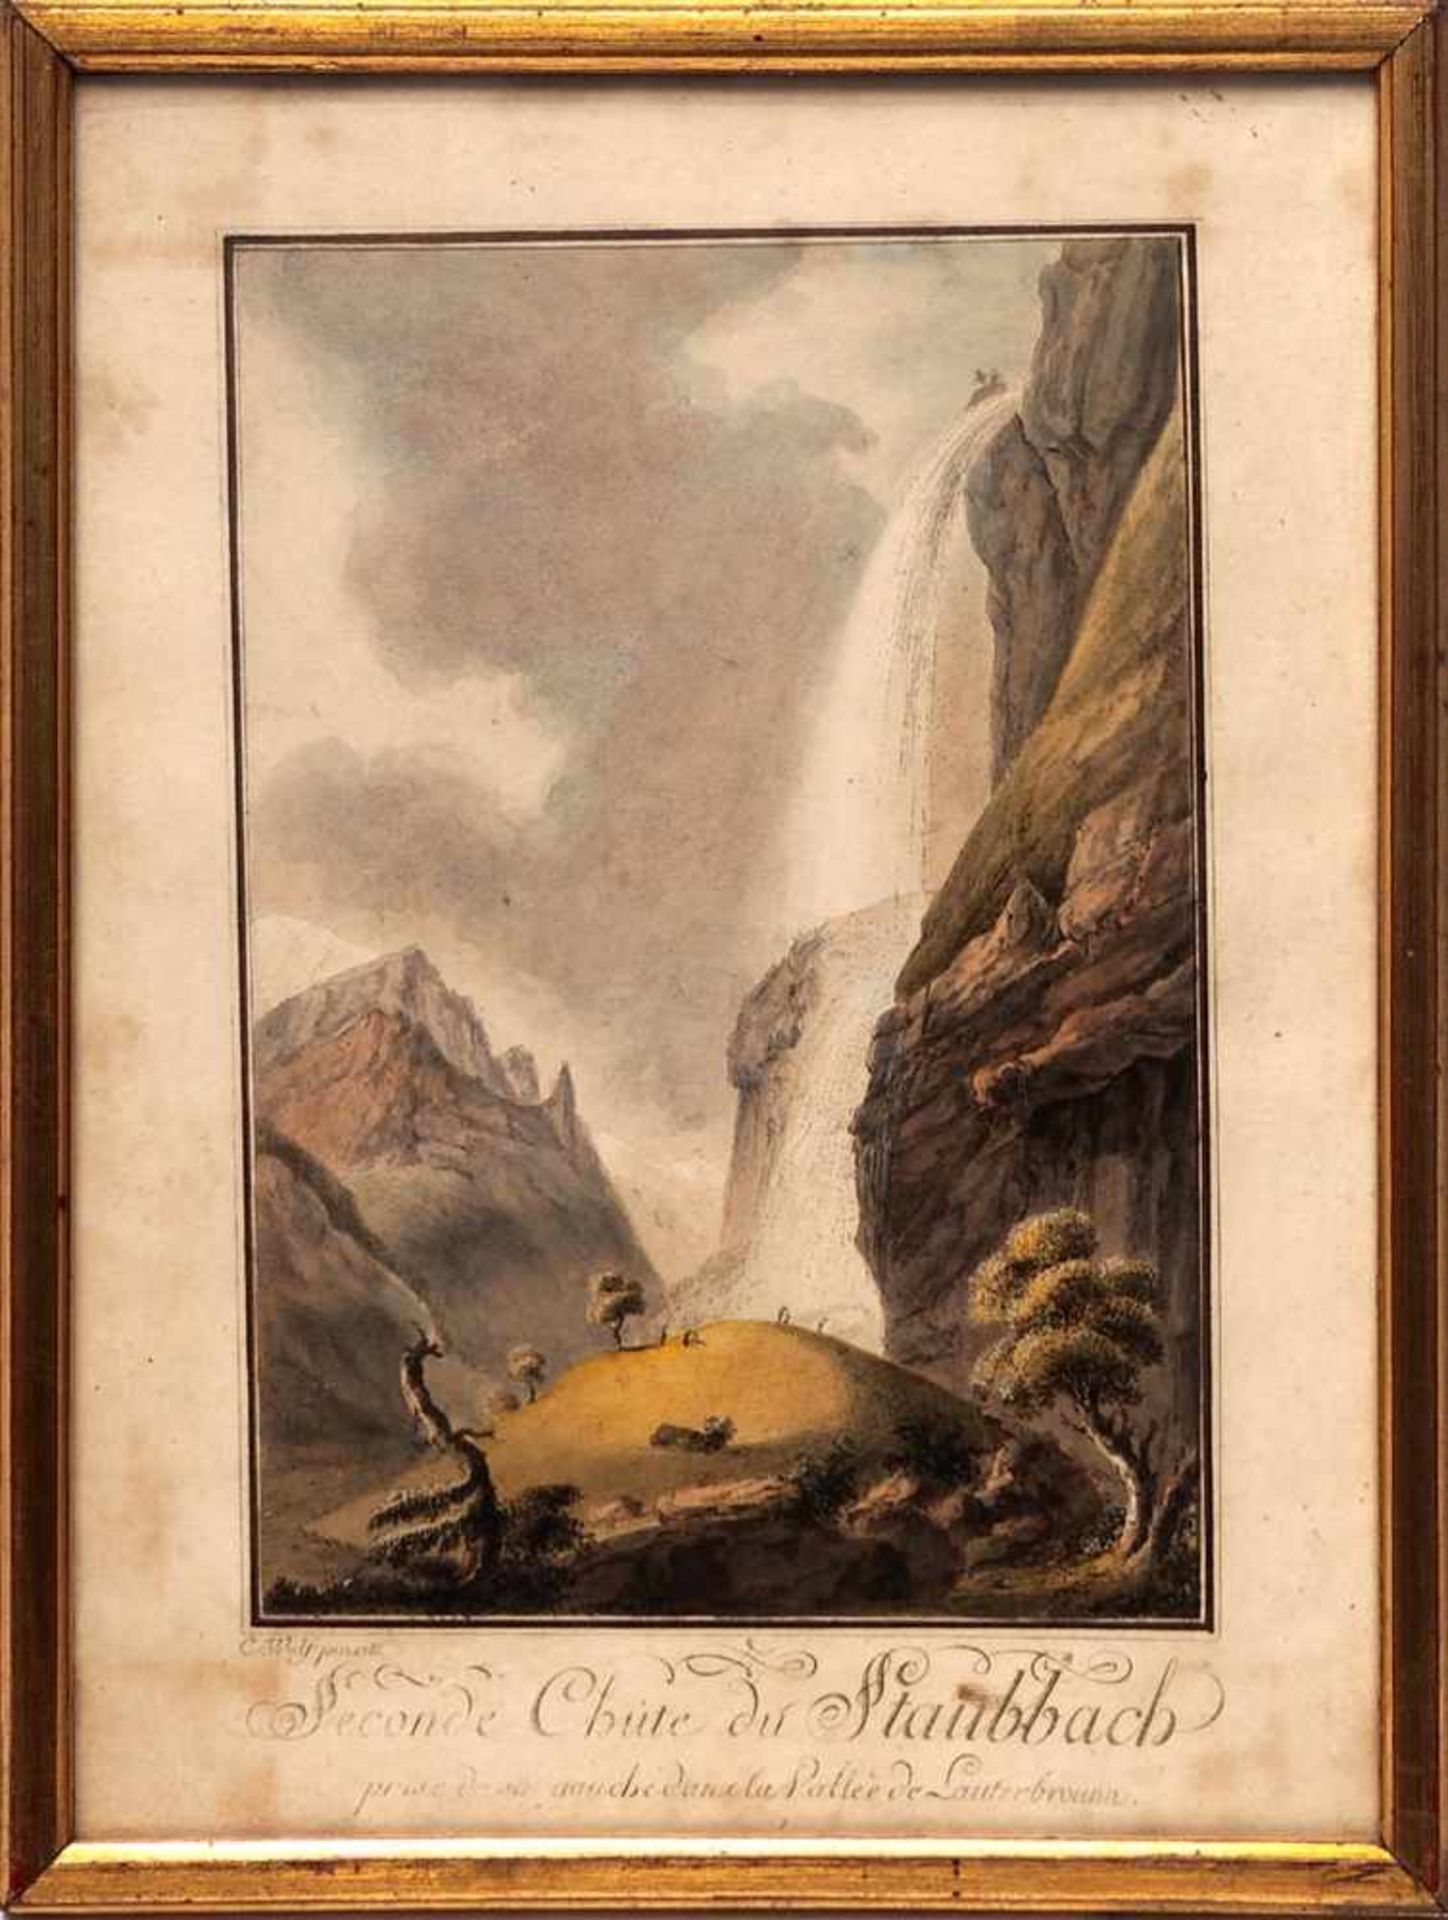 Wolf, Caspar, 1735 - 1798"Seconde chute du Staubbach". Farbaquatinta, ger. Blattgröße 24,5x18cm.